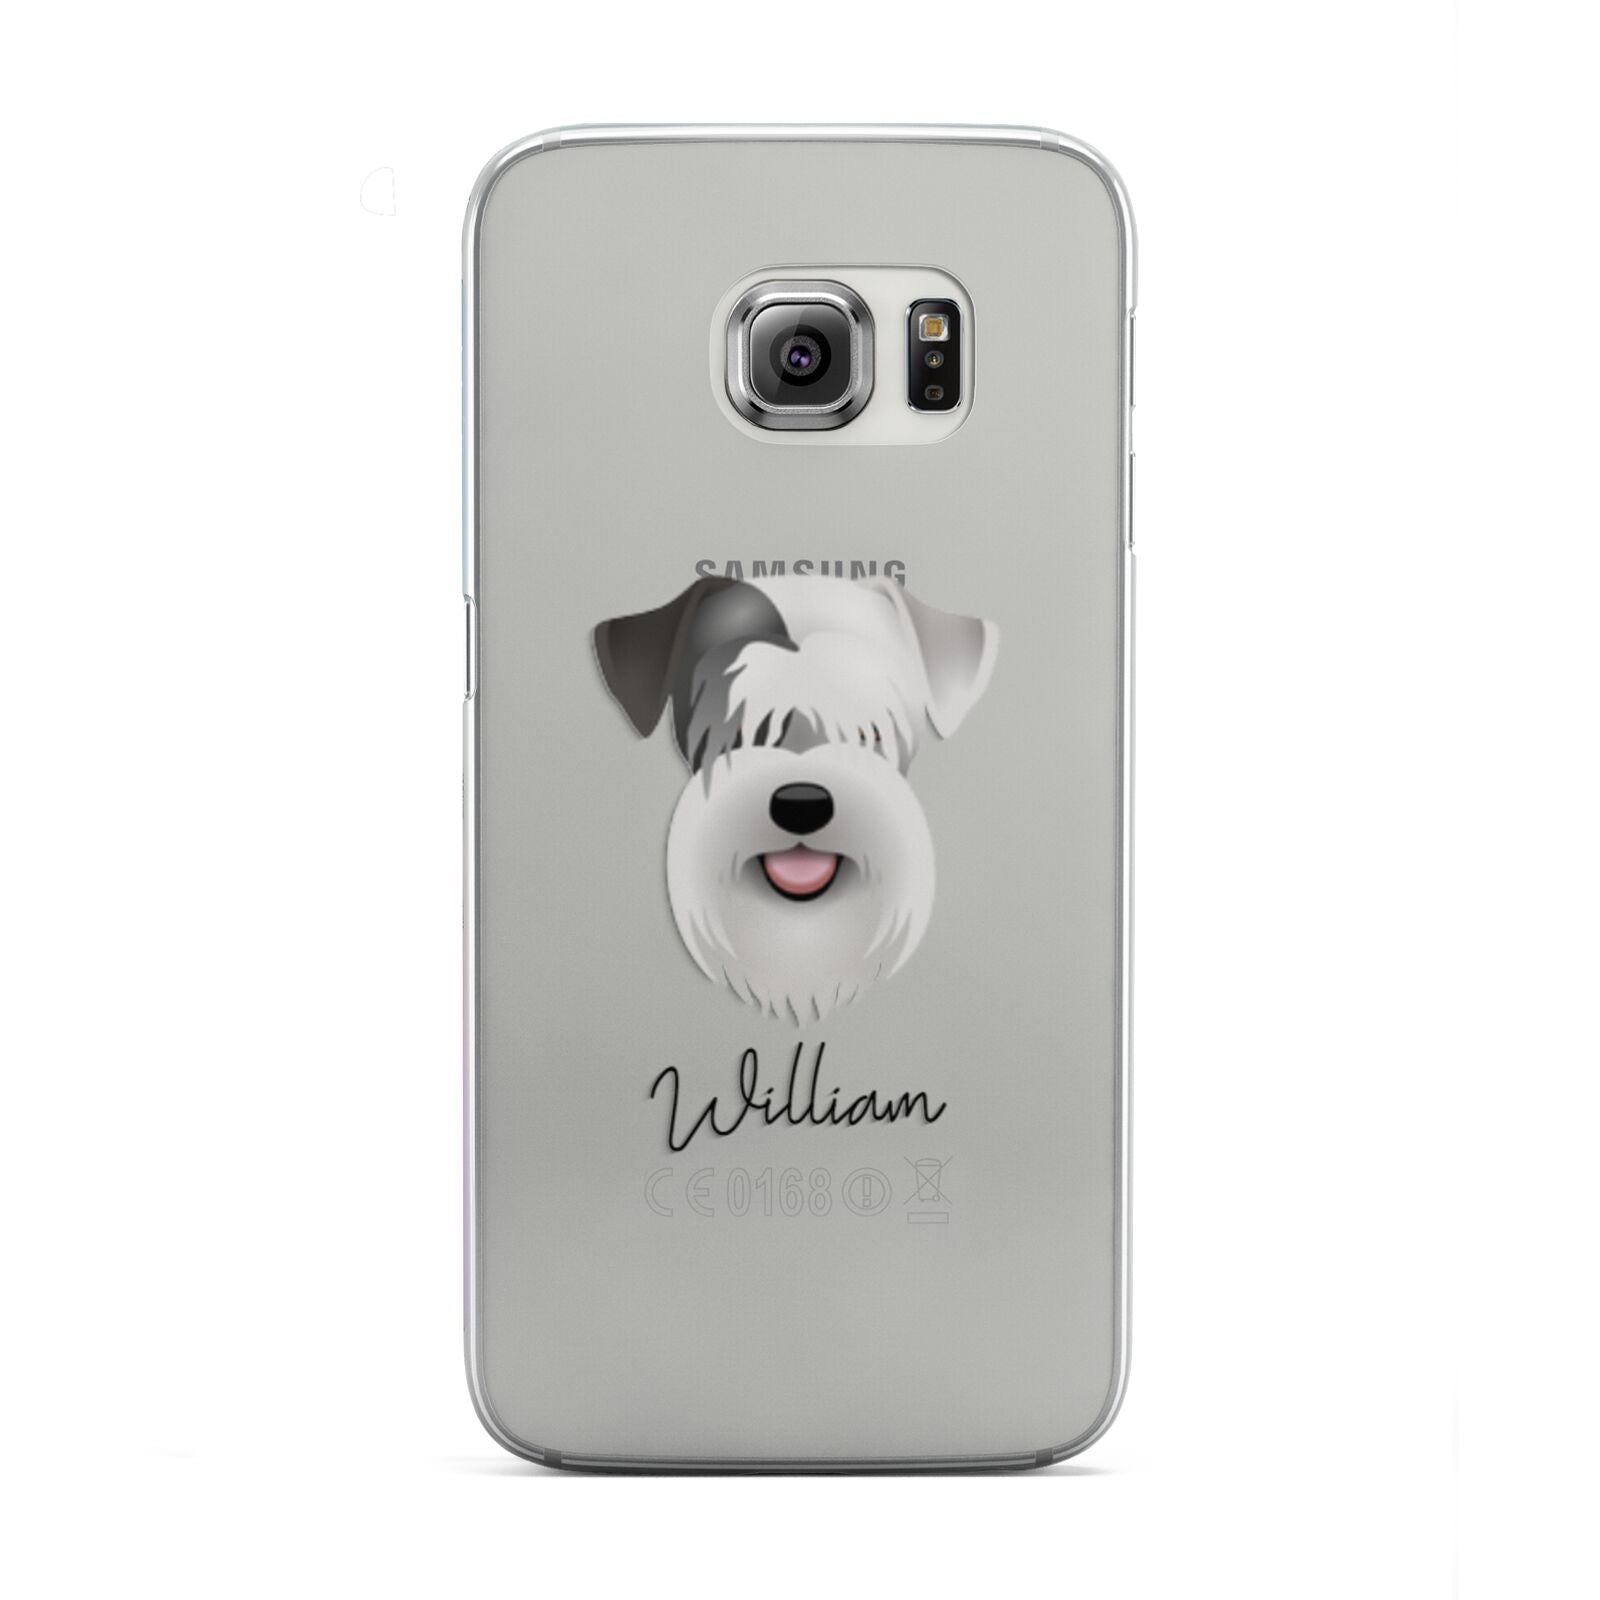 Sealyham Terrier Personalised Samsung Galaxy S6 Edge Case